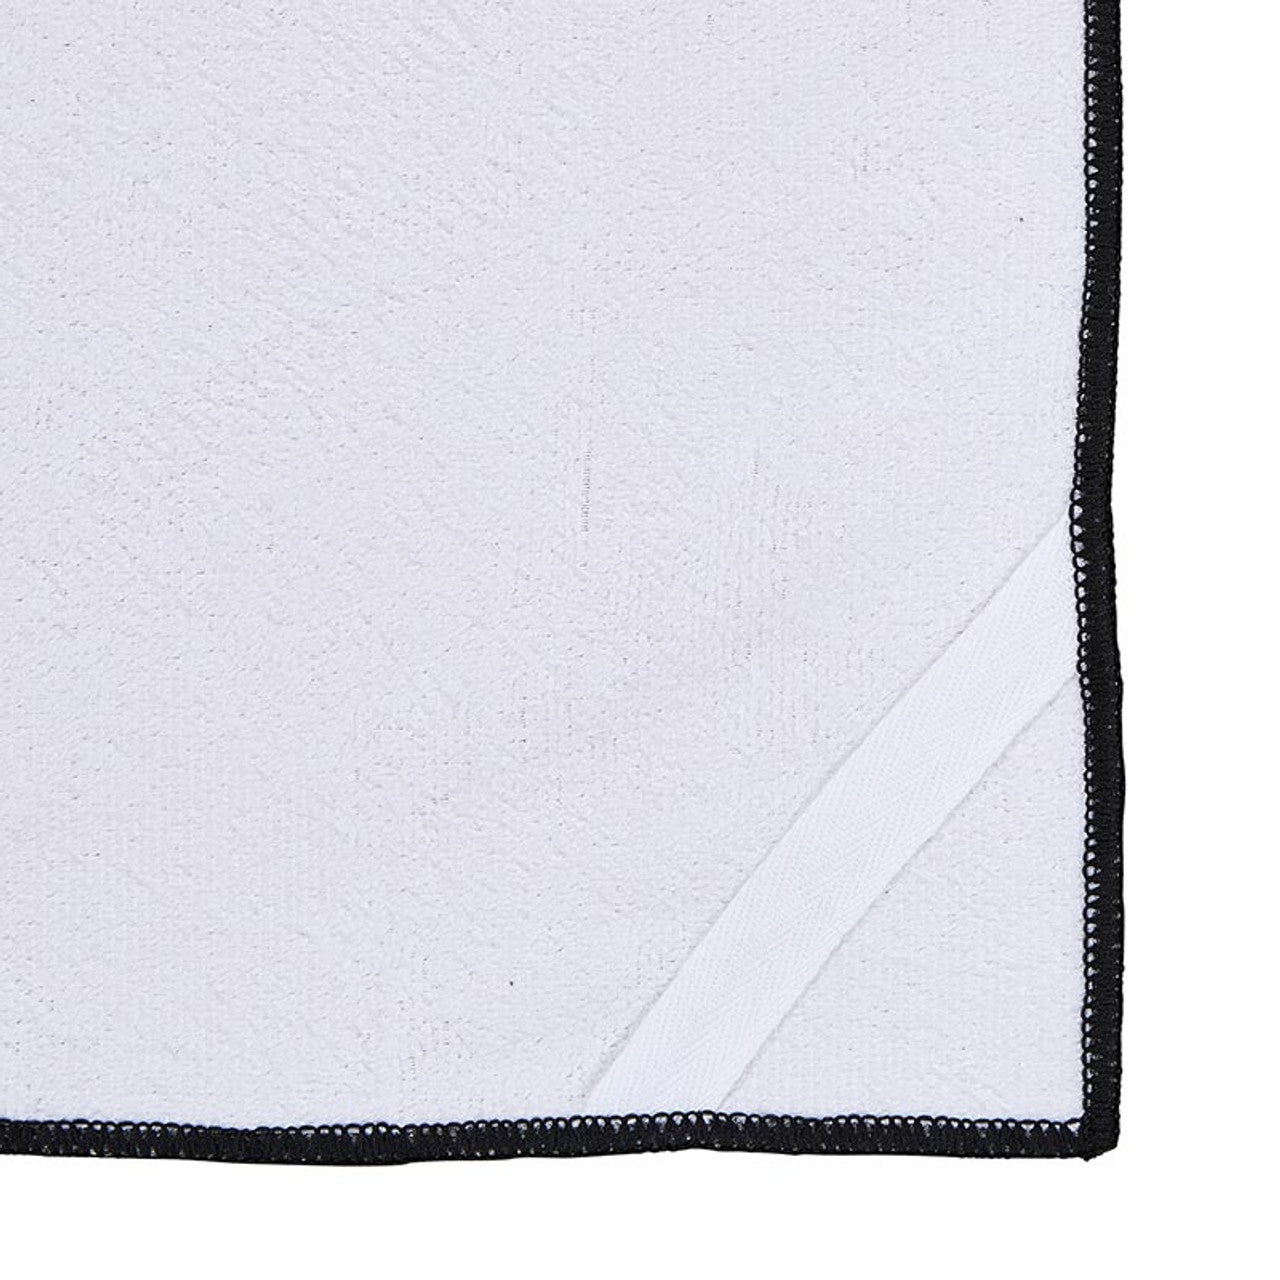 Ruff Life Microfiber Pet Towel | 56" x 28"